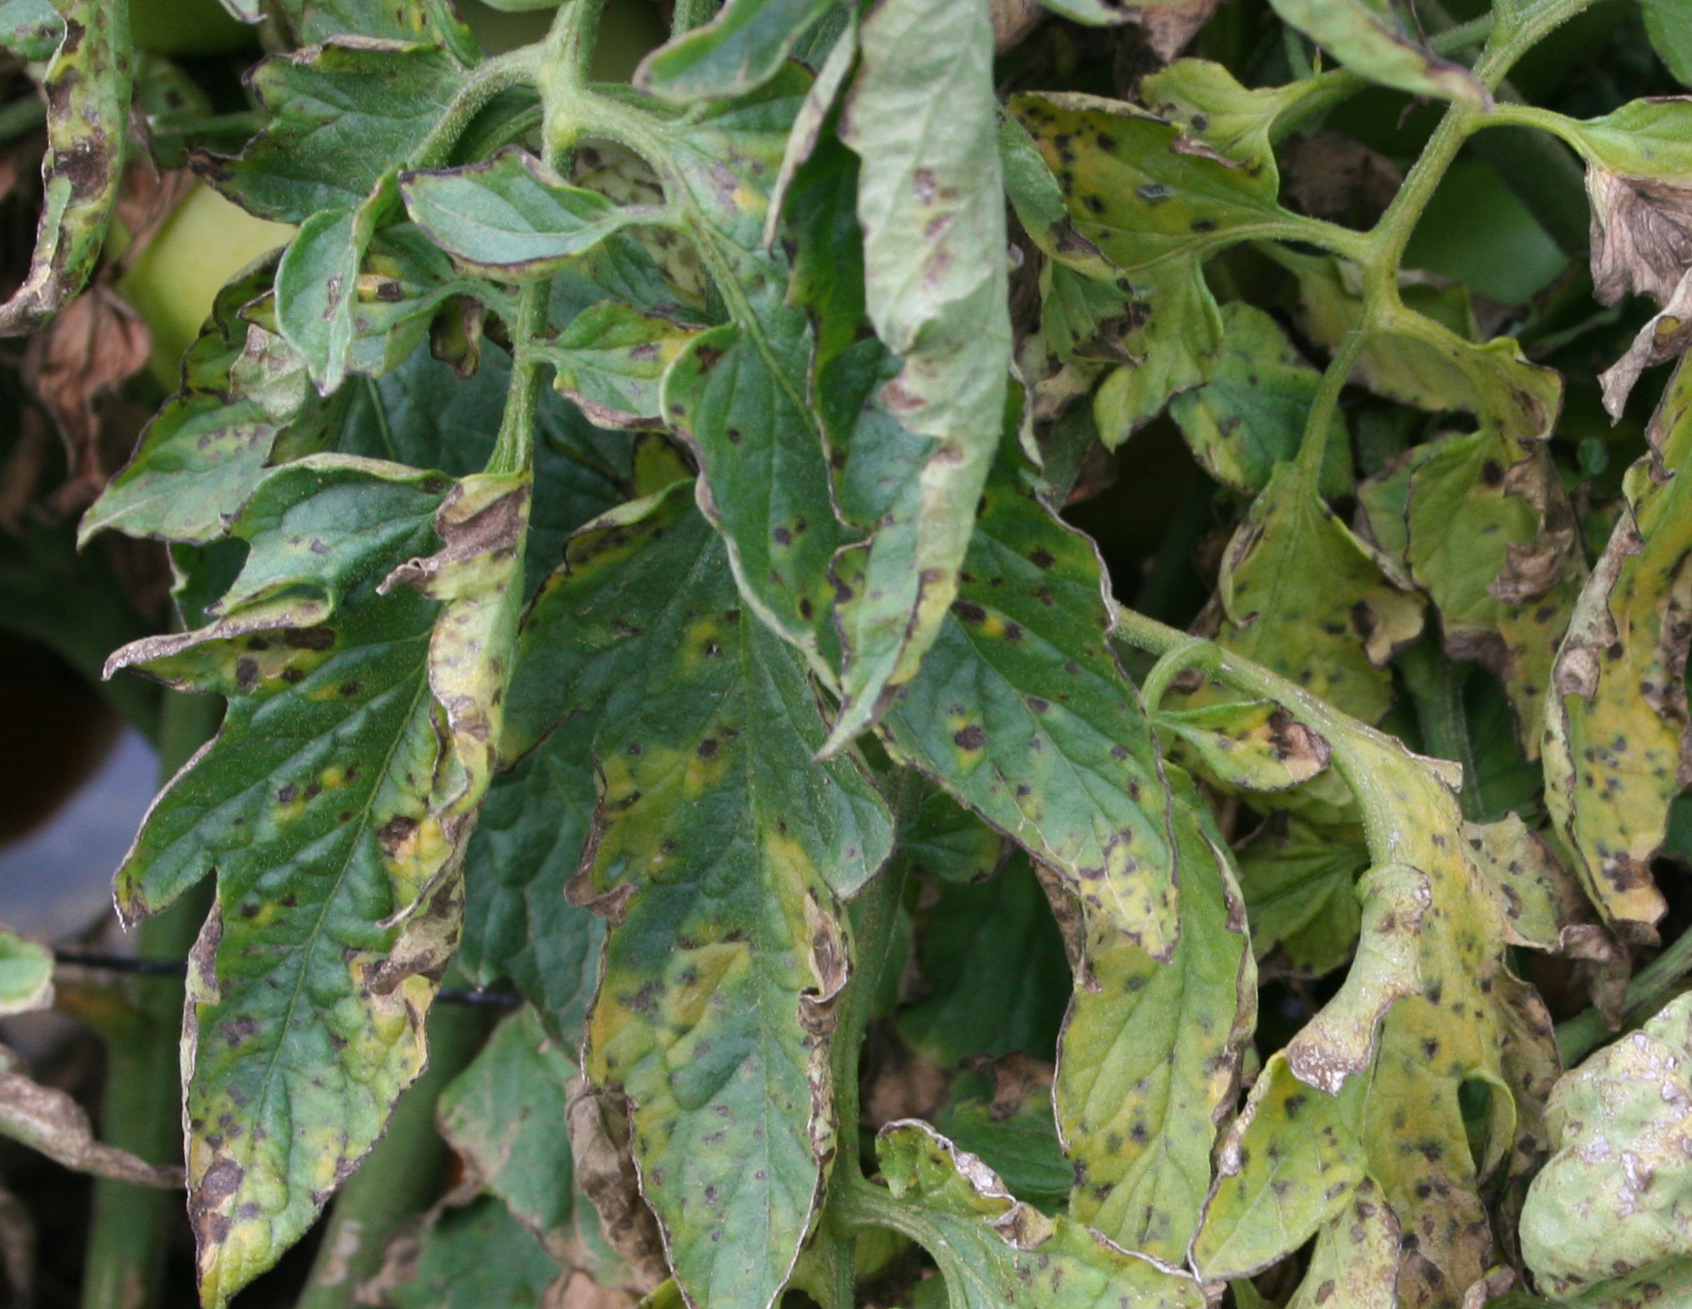 Bacterial spot on leaf.